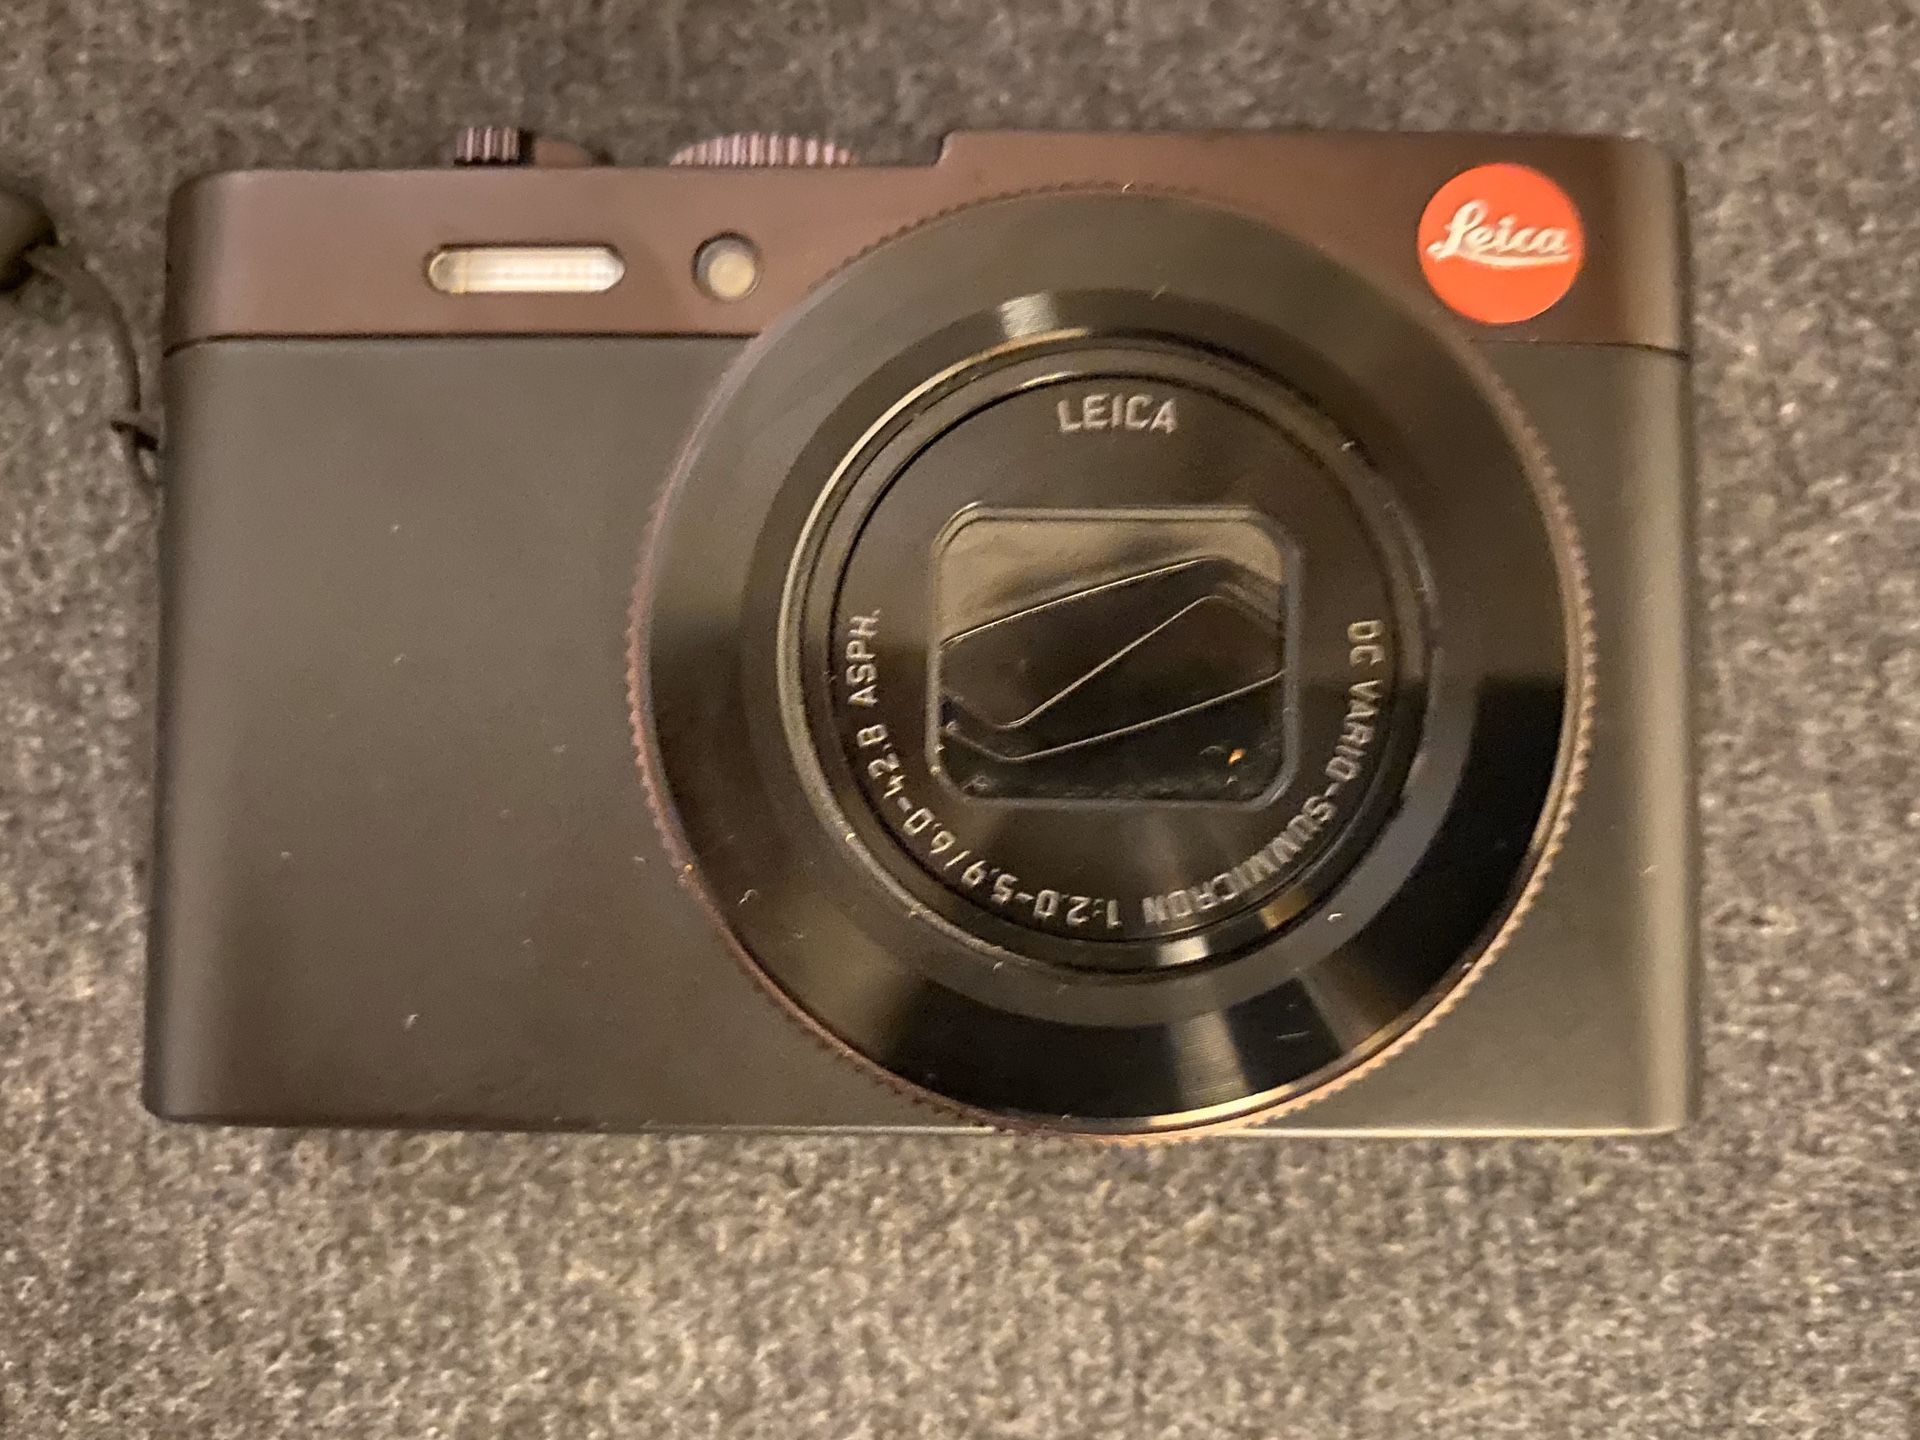 Leica C Typ 112 Compact Camera